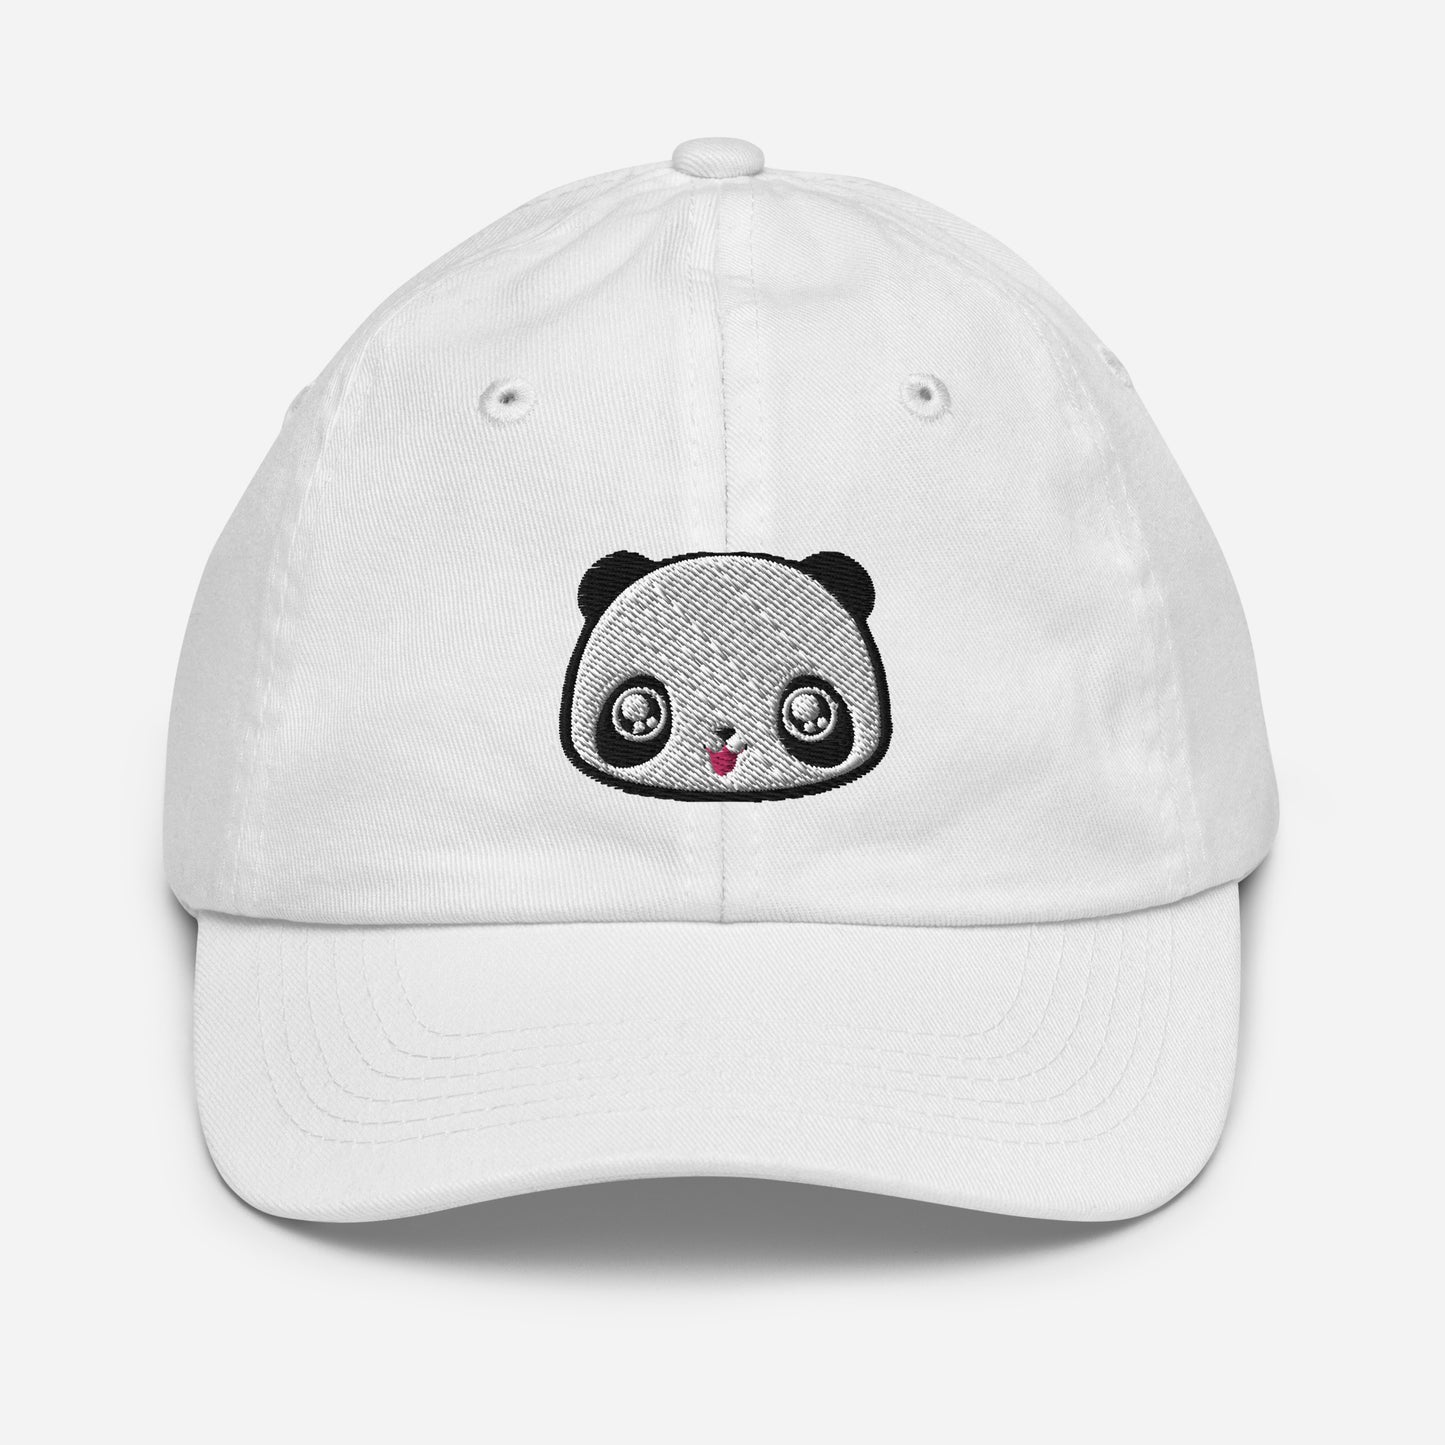 White baseball cap with print of panda head